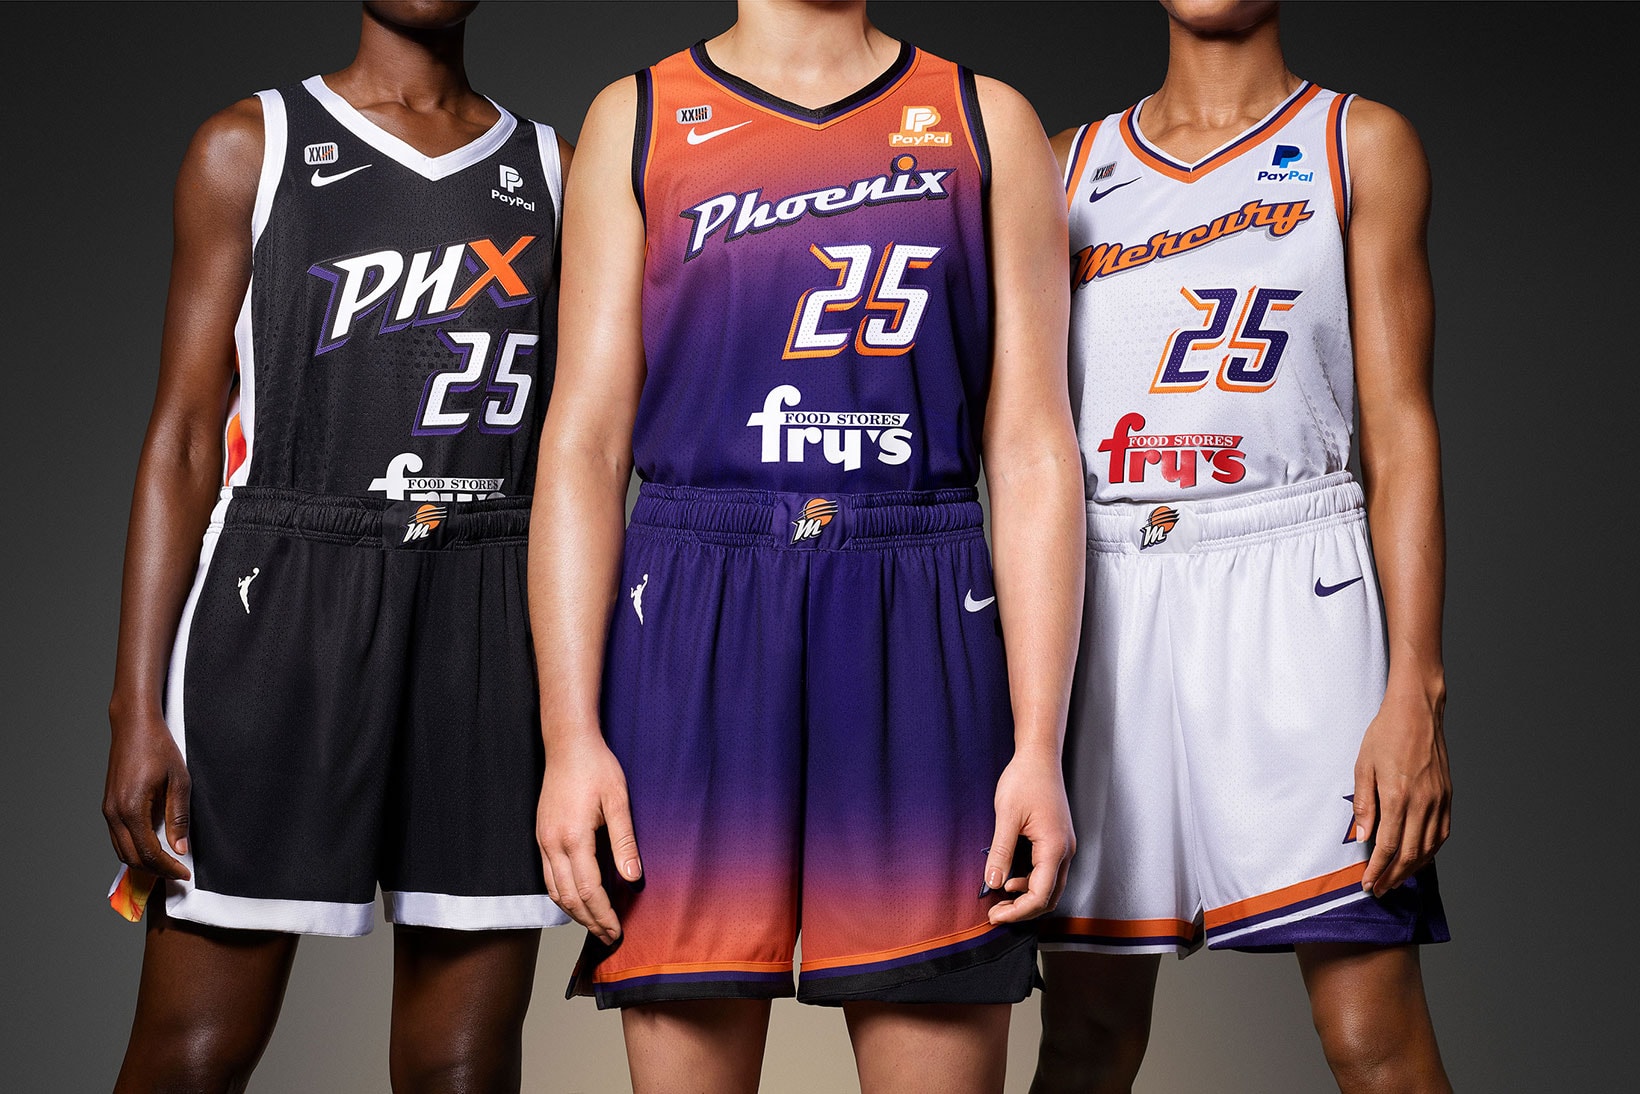 nike wnba uniforms editions apparel collection basketball phoenix mercury